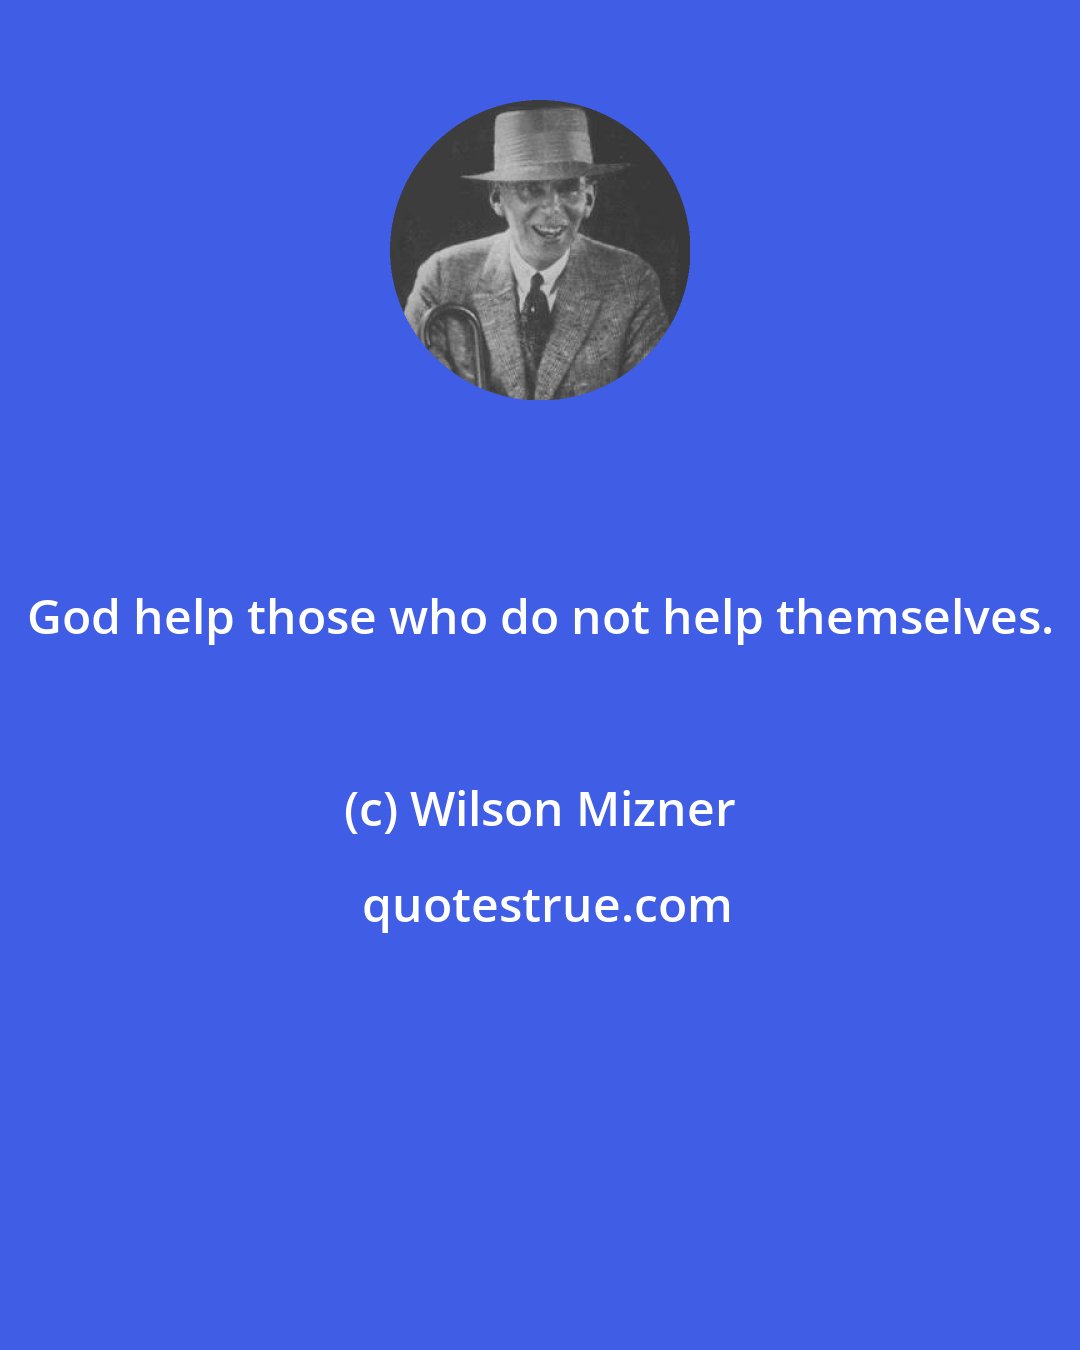 Wilson Mizner: God help those who do not help themselves.